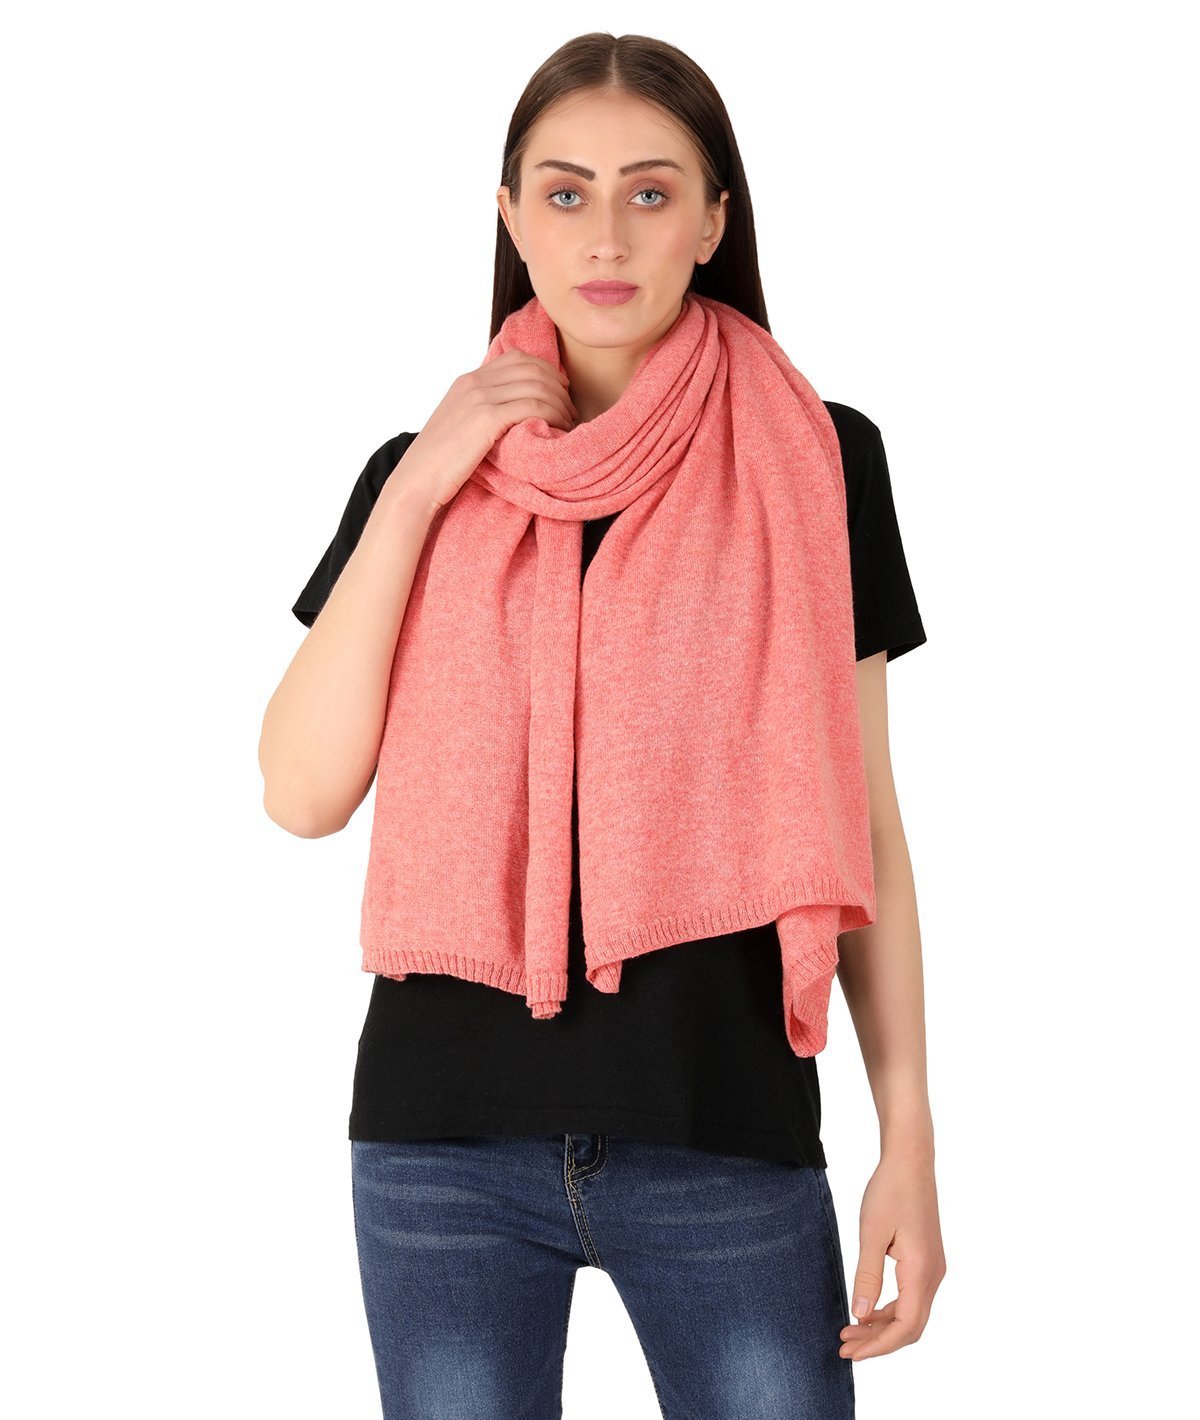 Elora - Lady Pink Lambswool & Nylon Knitted Shawl Wrap